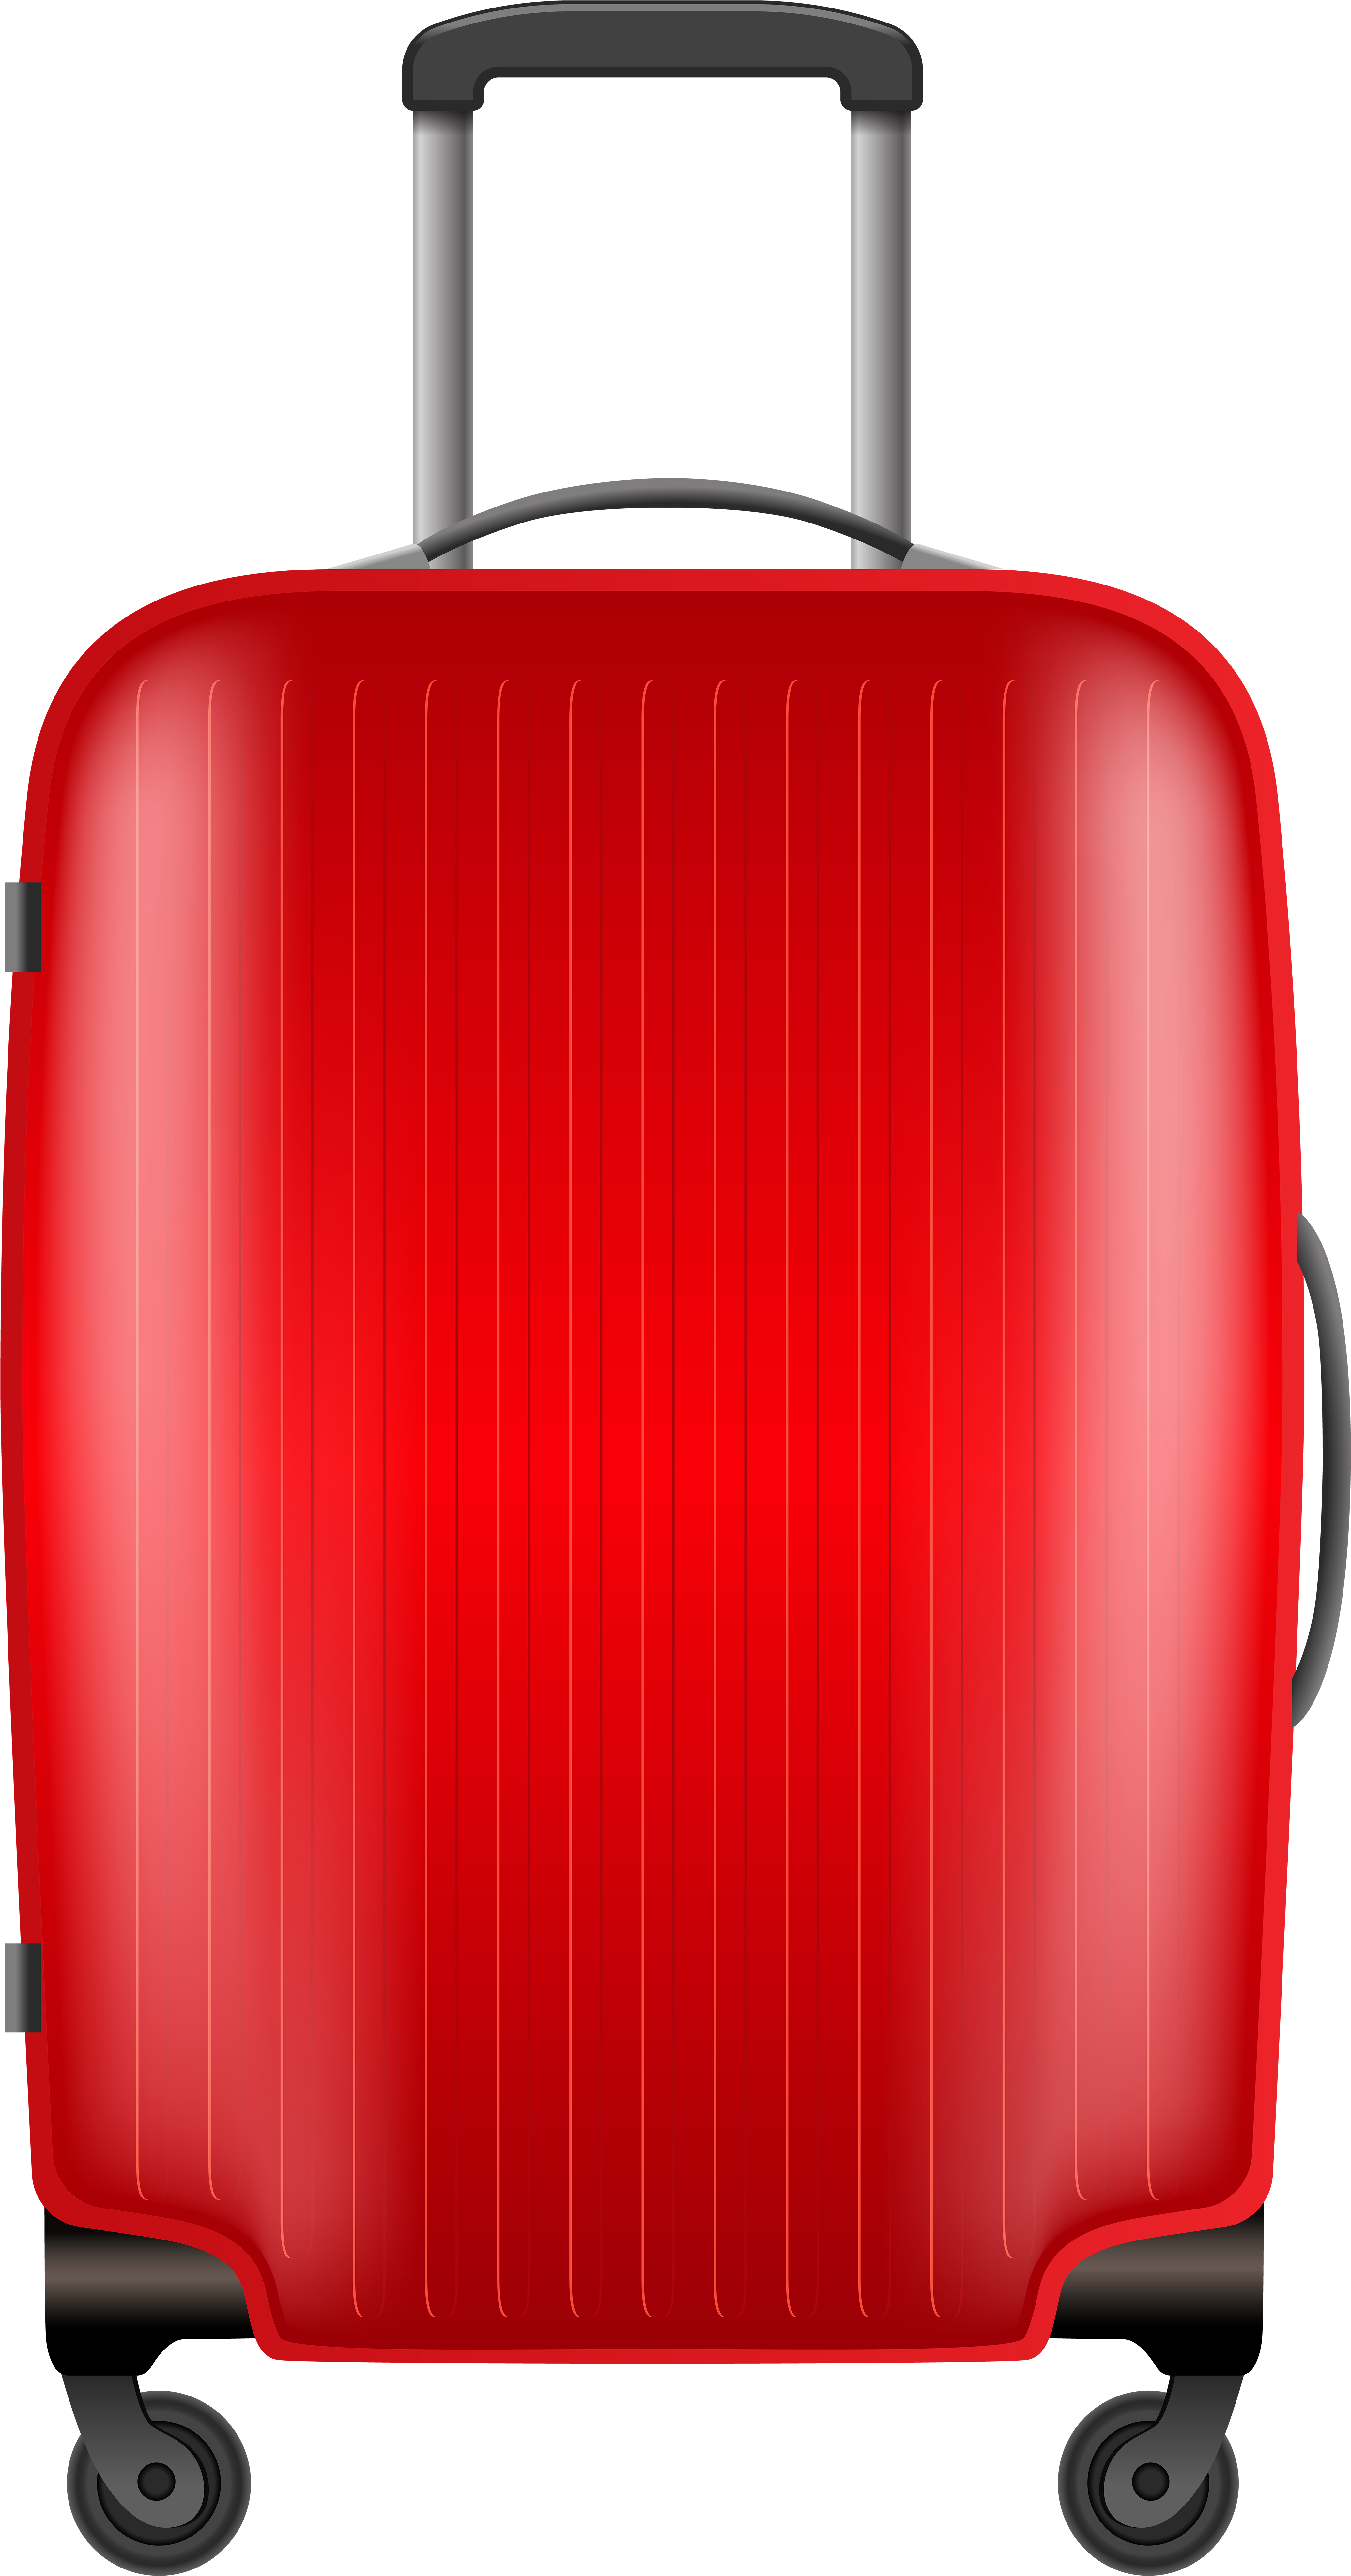 Free Suitcase Transparent, Download Free Suitcase Transparent png ...